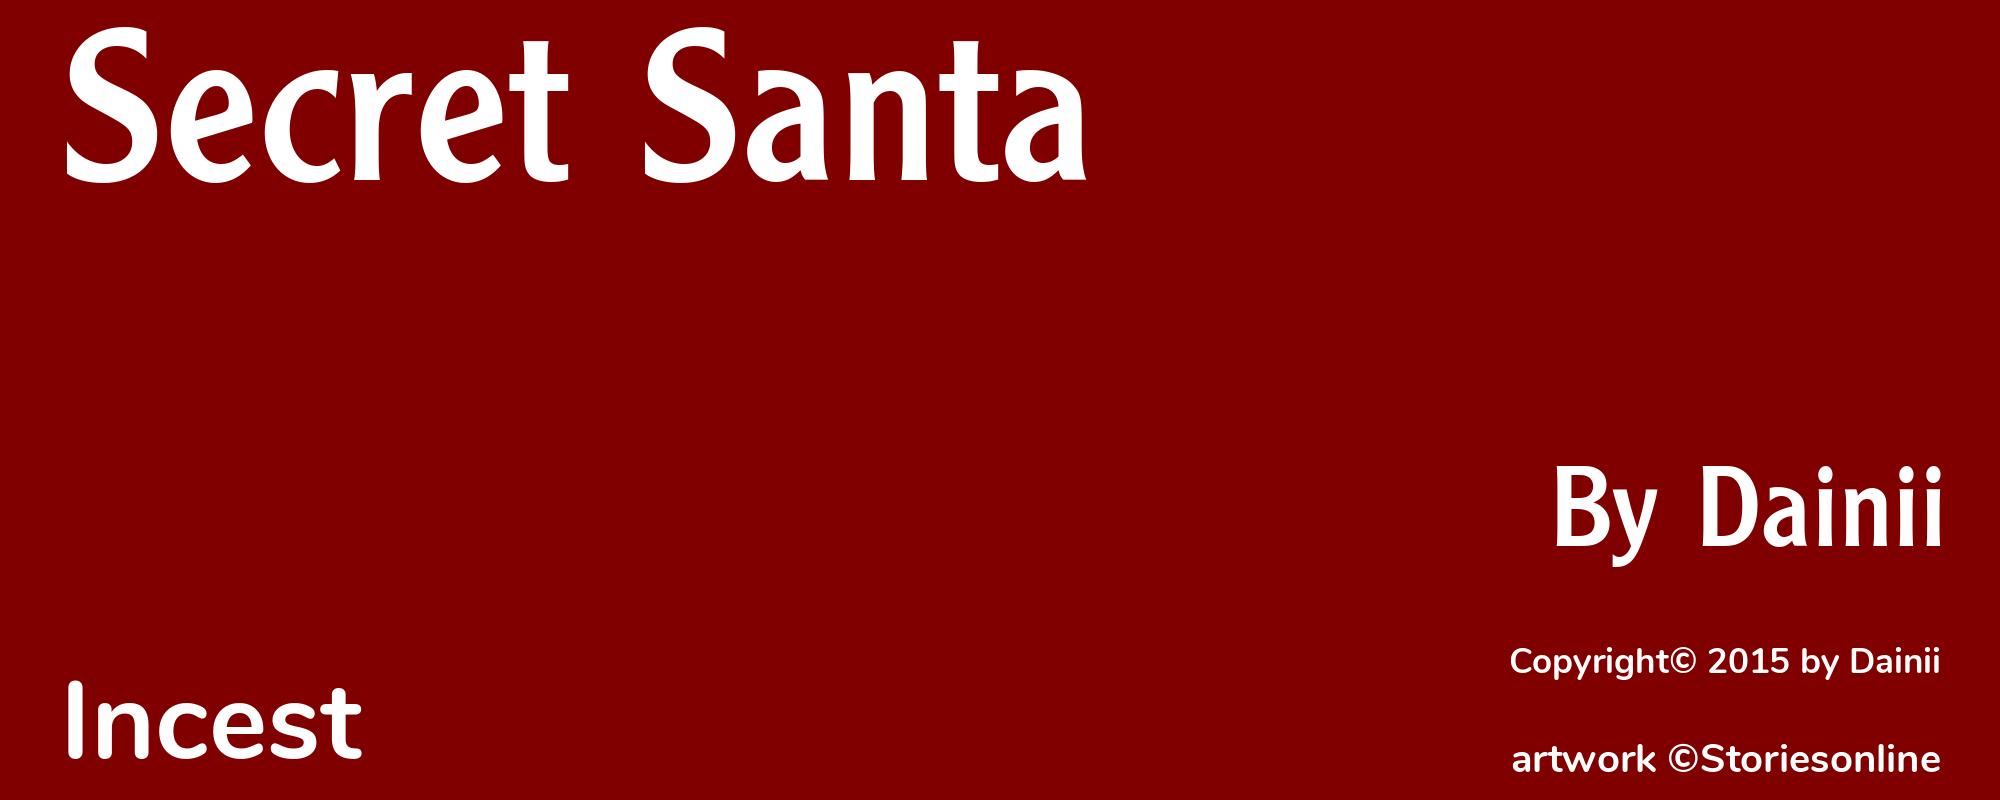 Secret Santa - Cover